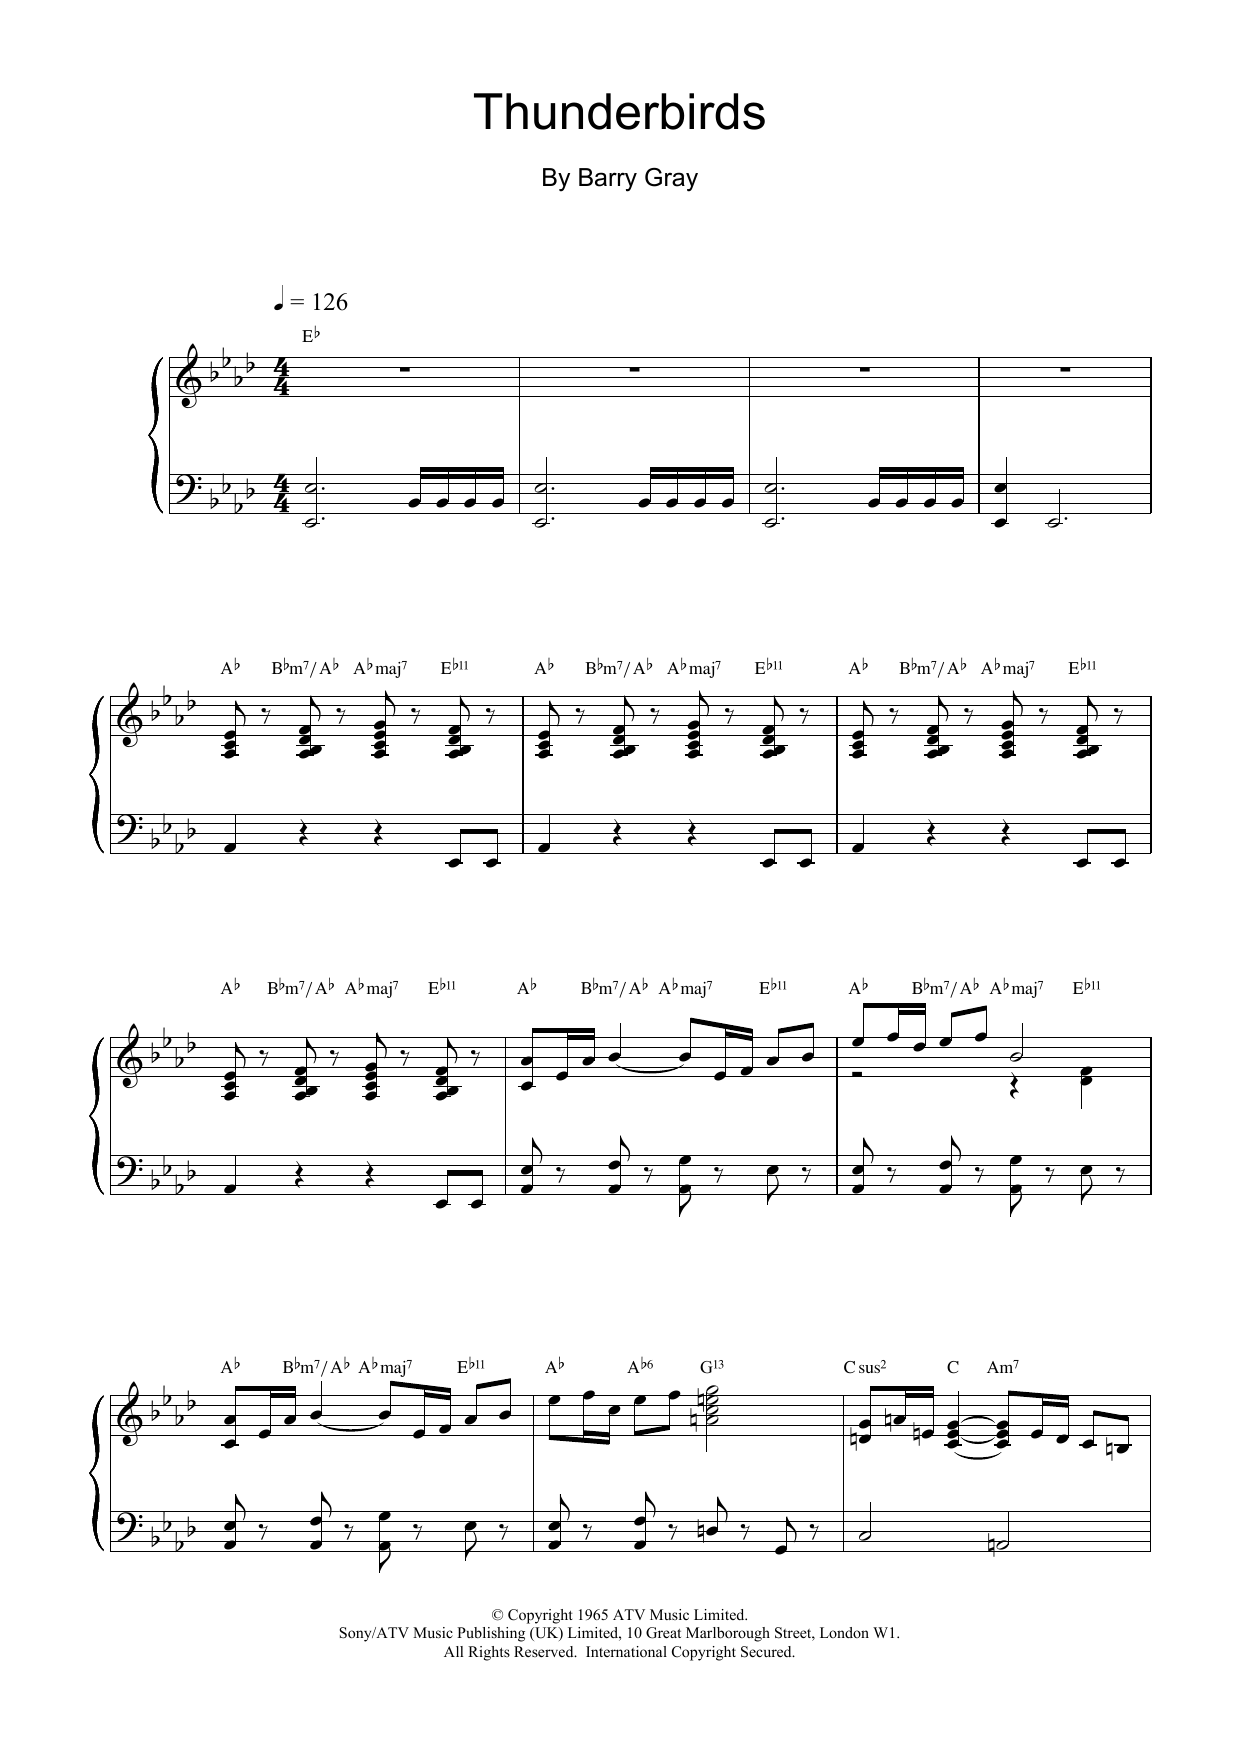 Barry Gray Thunderbirds sheet music notes printable PDF score